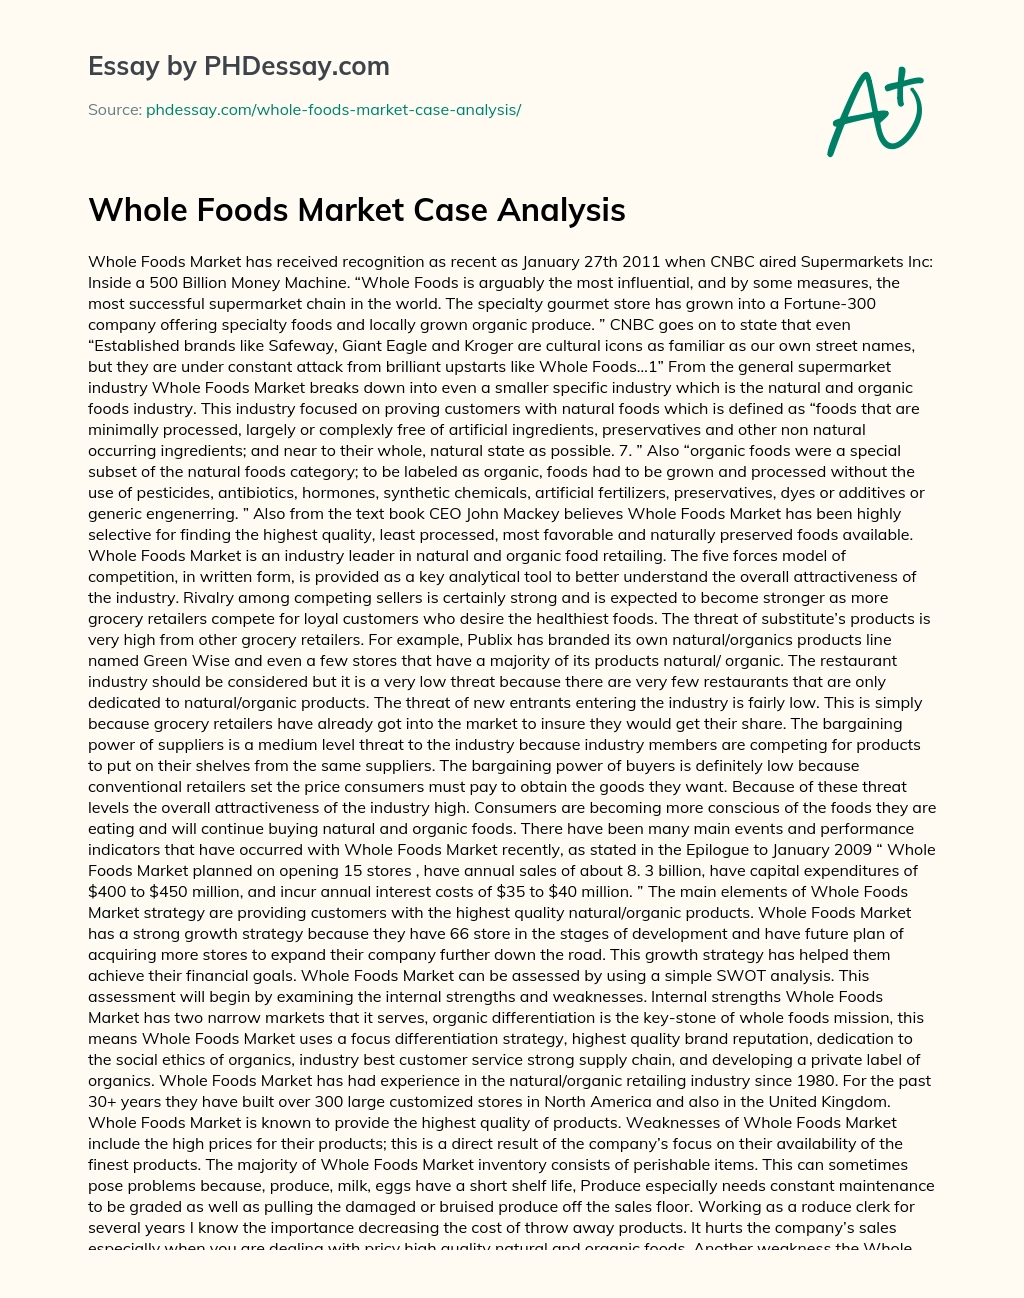 Whole Foods Market Case Analysis essay